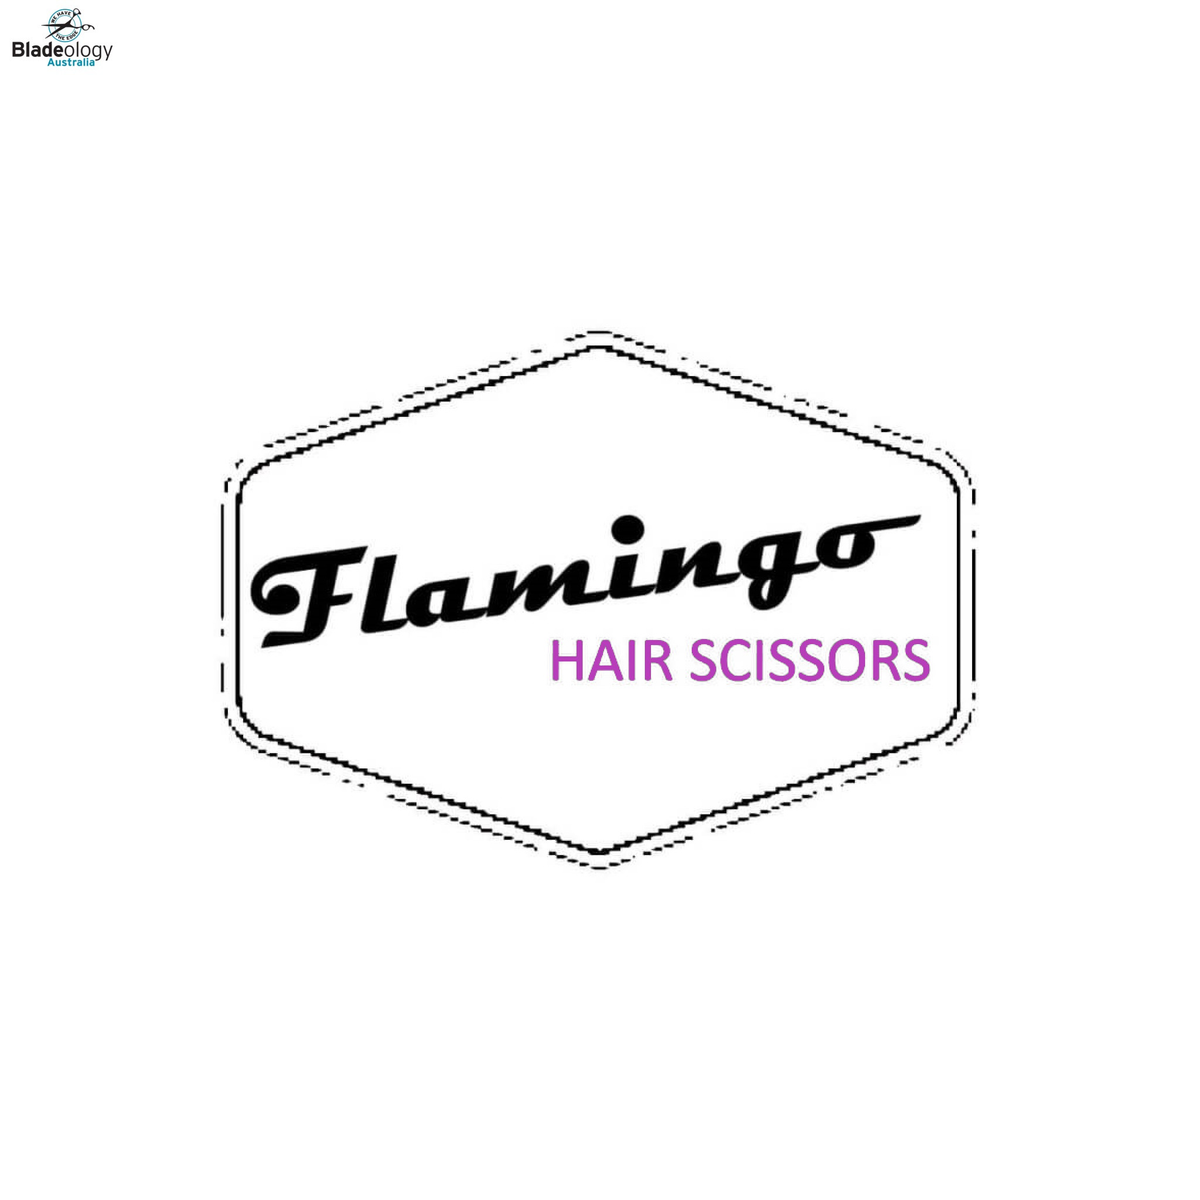 Flamingo Hair Scissors logo